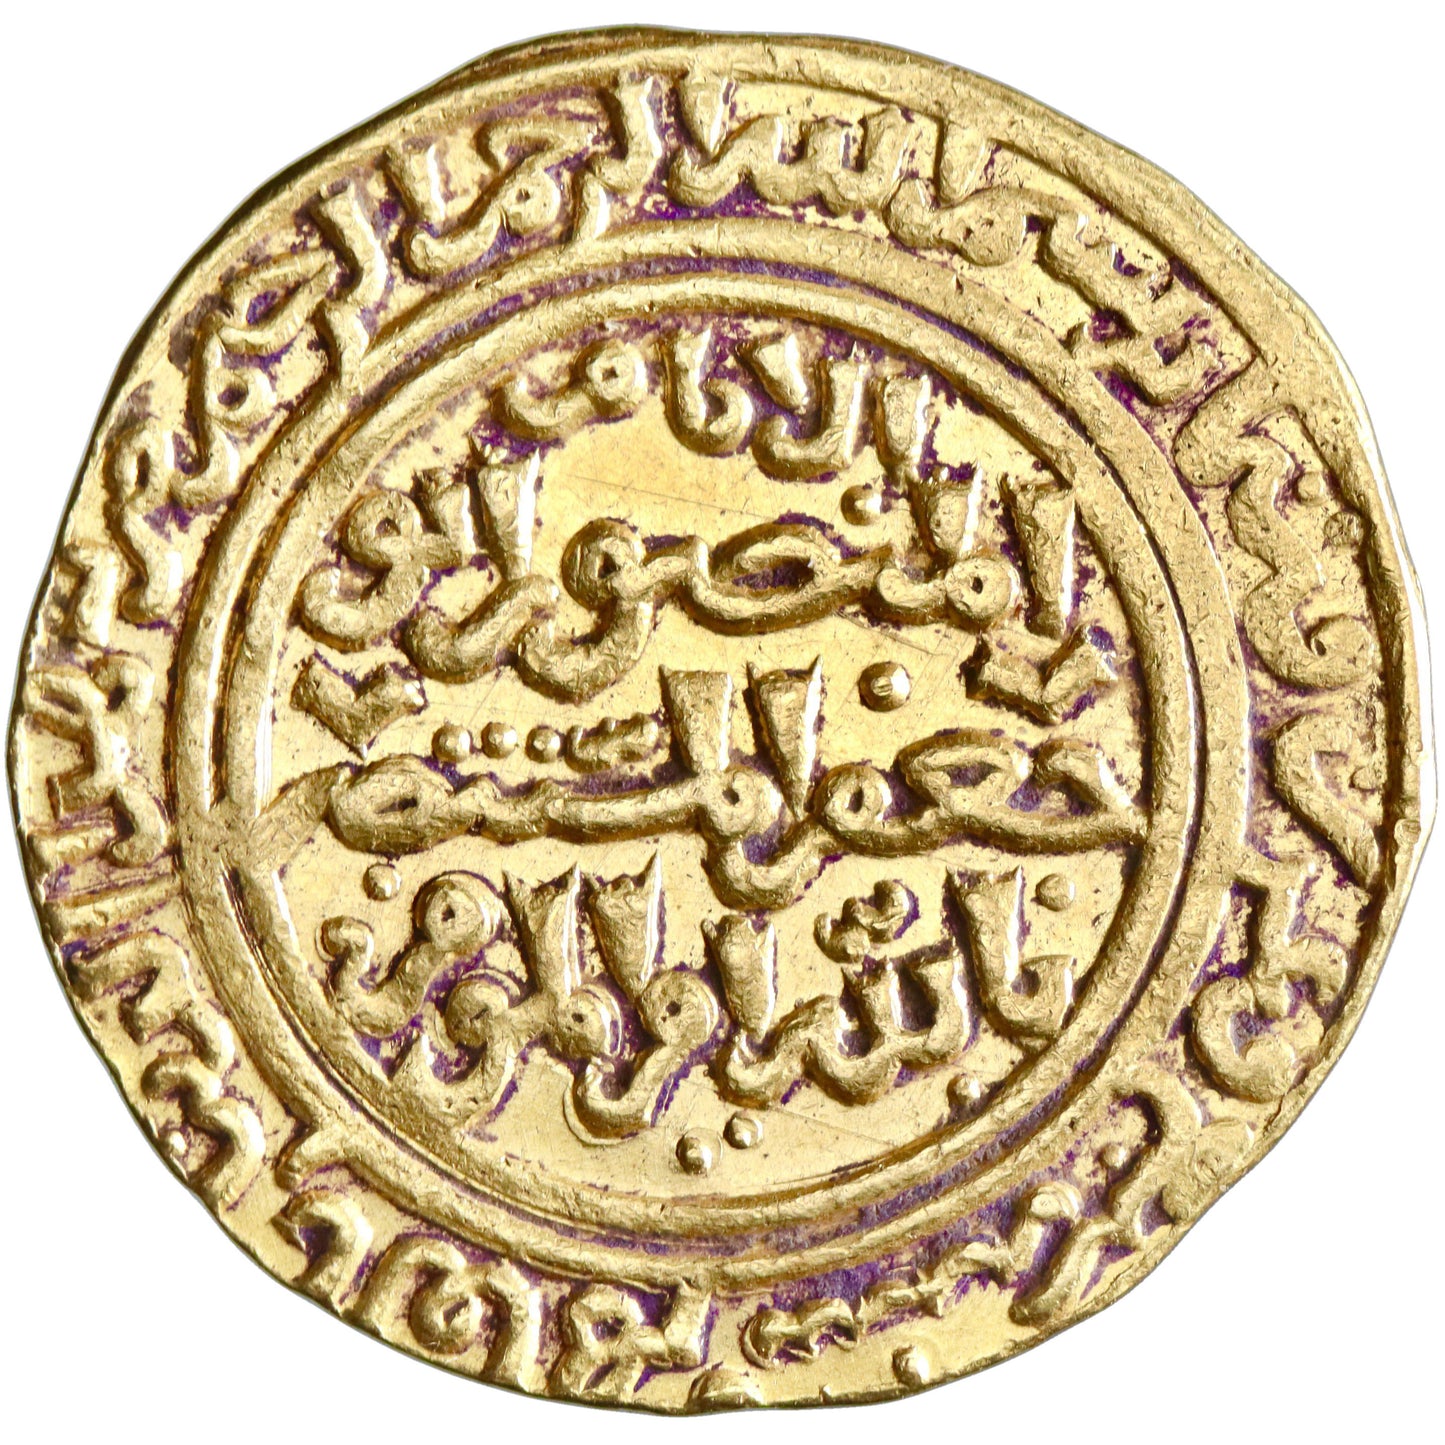 Ayyubid, al-Kamil I Muhammad, gold dinar, al-Qahira (Cairo) mint, AH 627, citing al-Mustansir